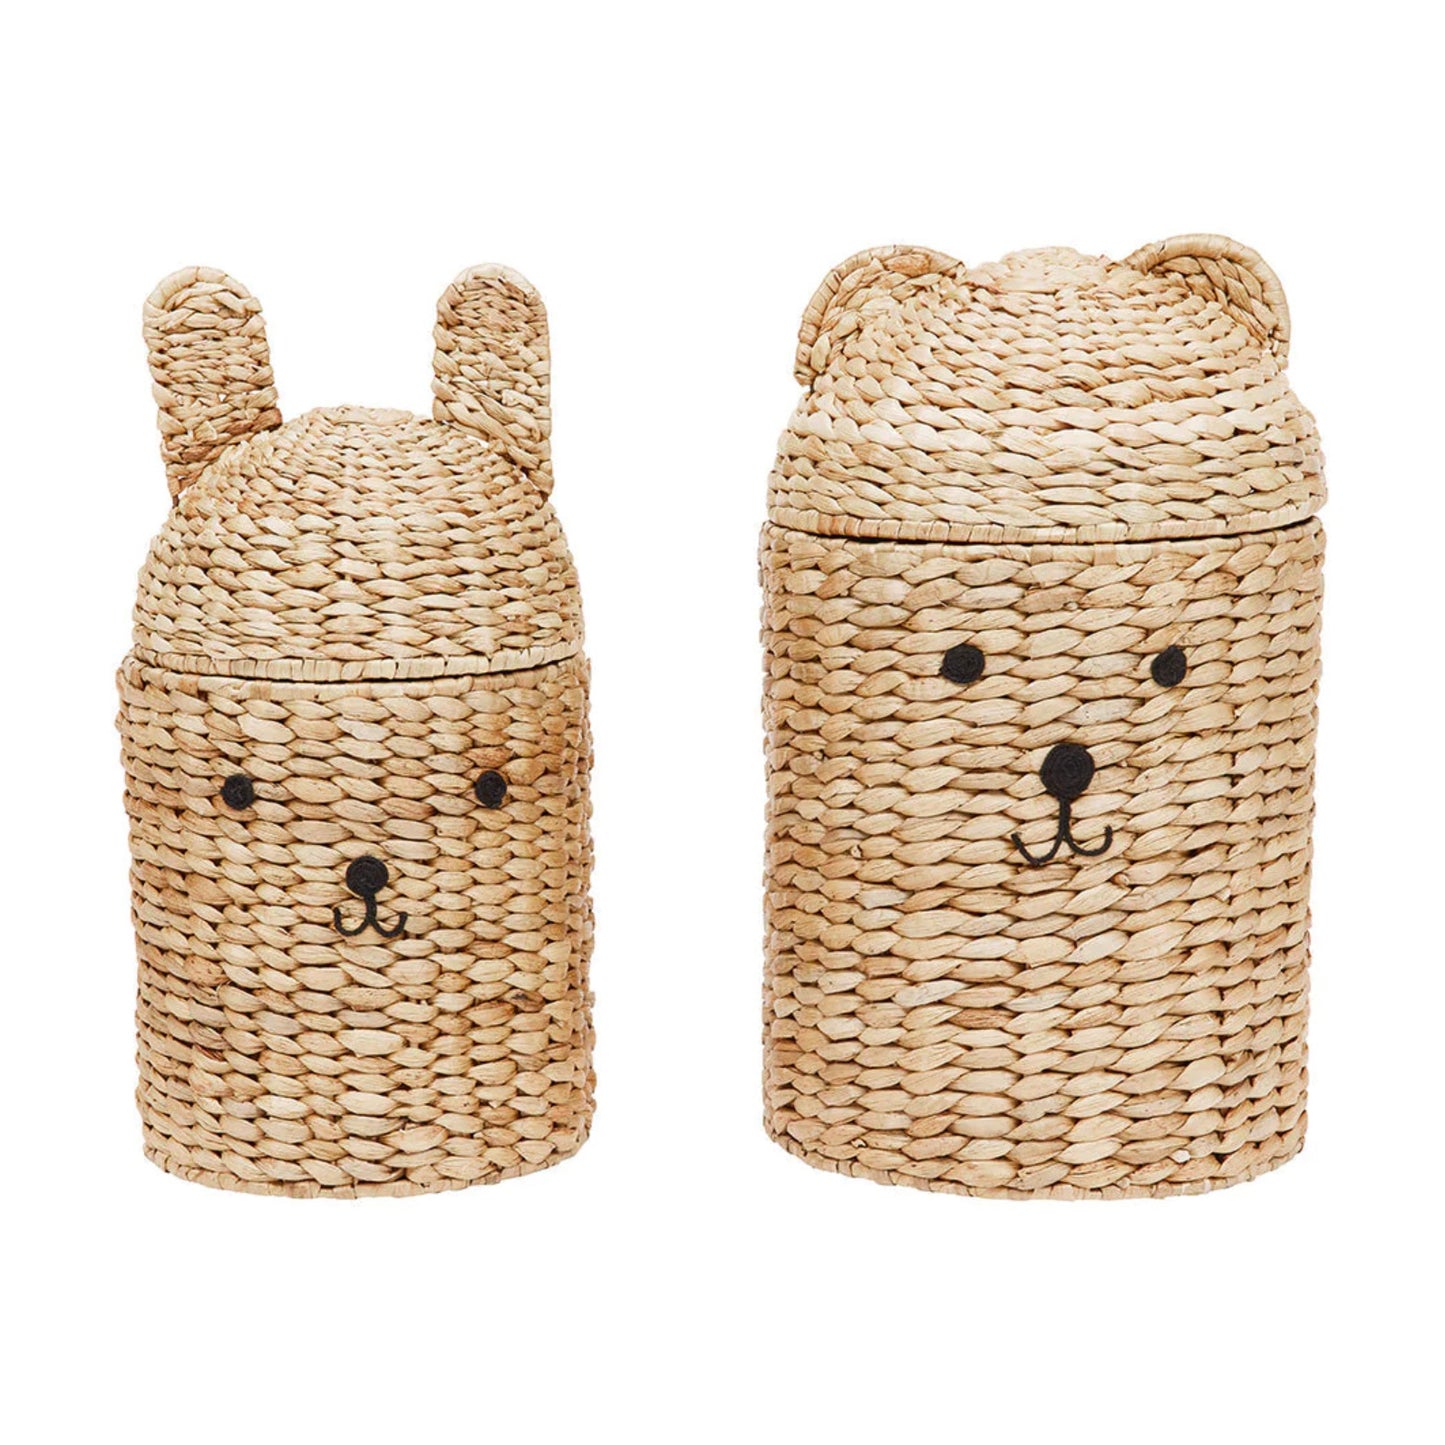 Bear & Rabbit Storage Baskets